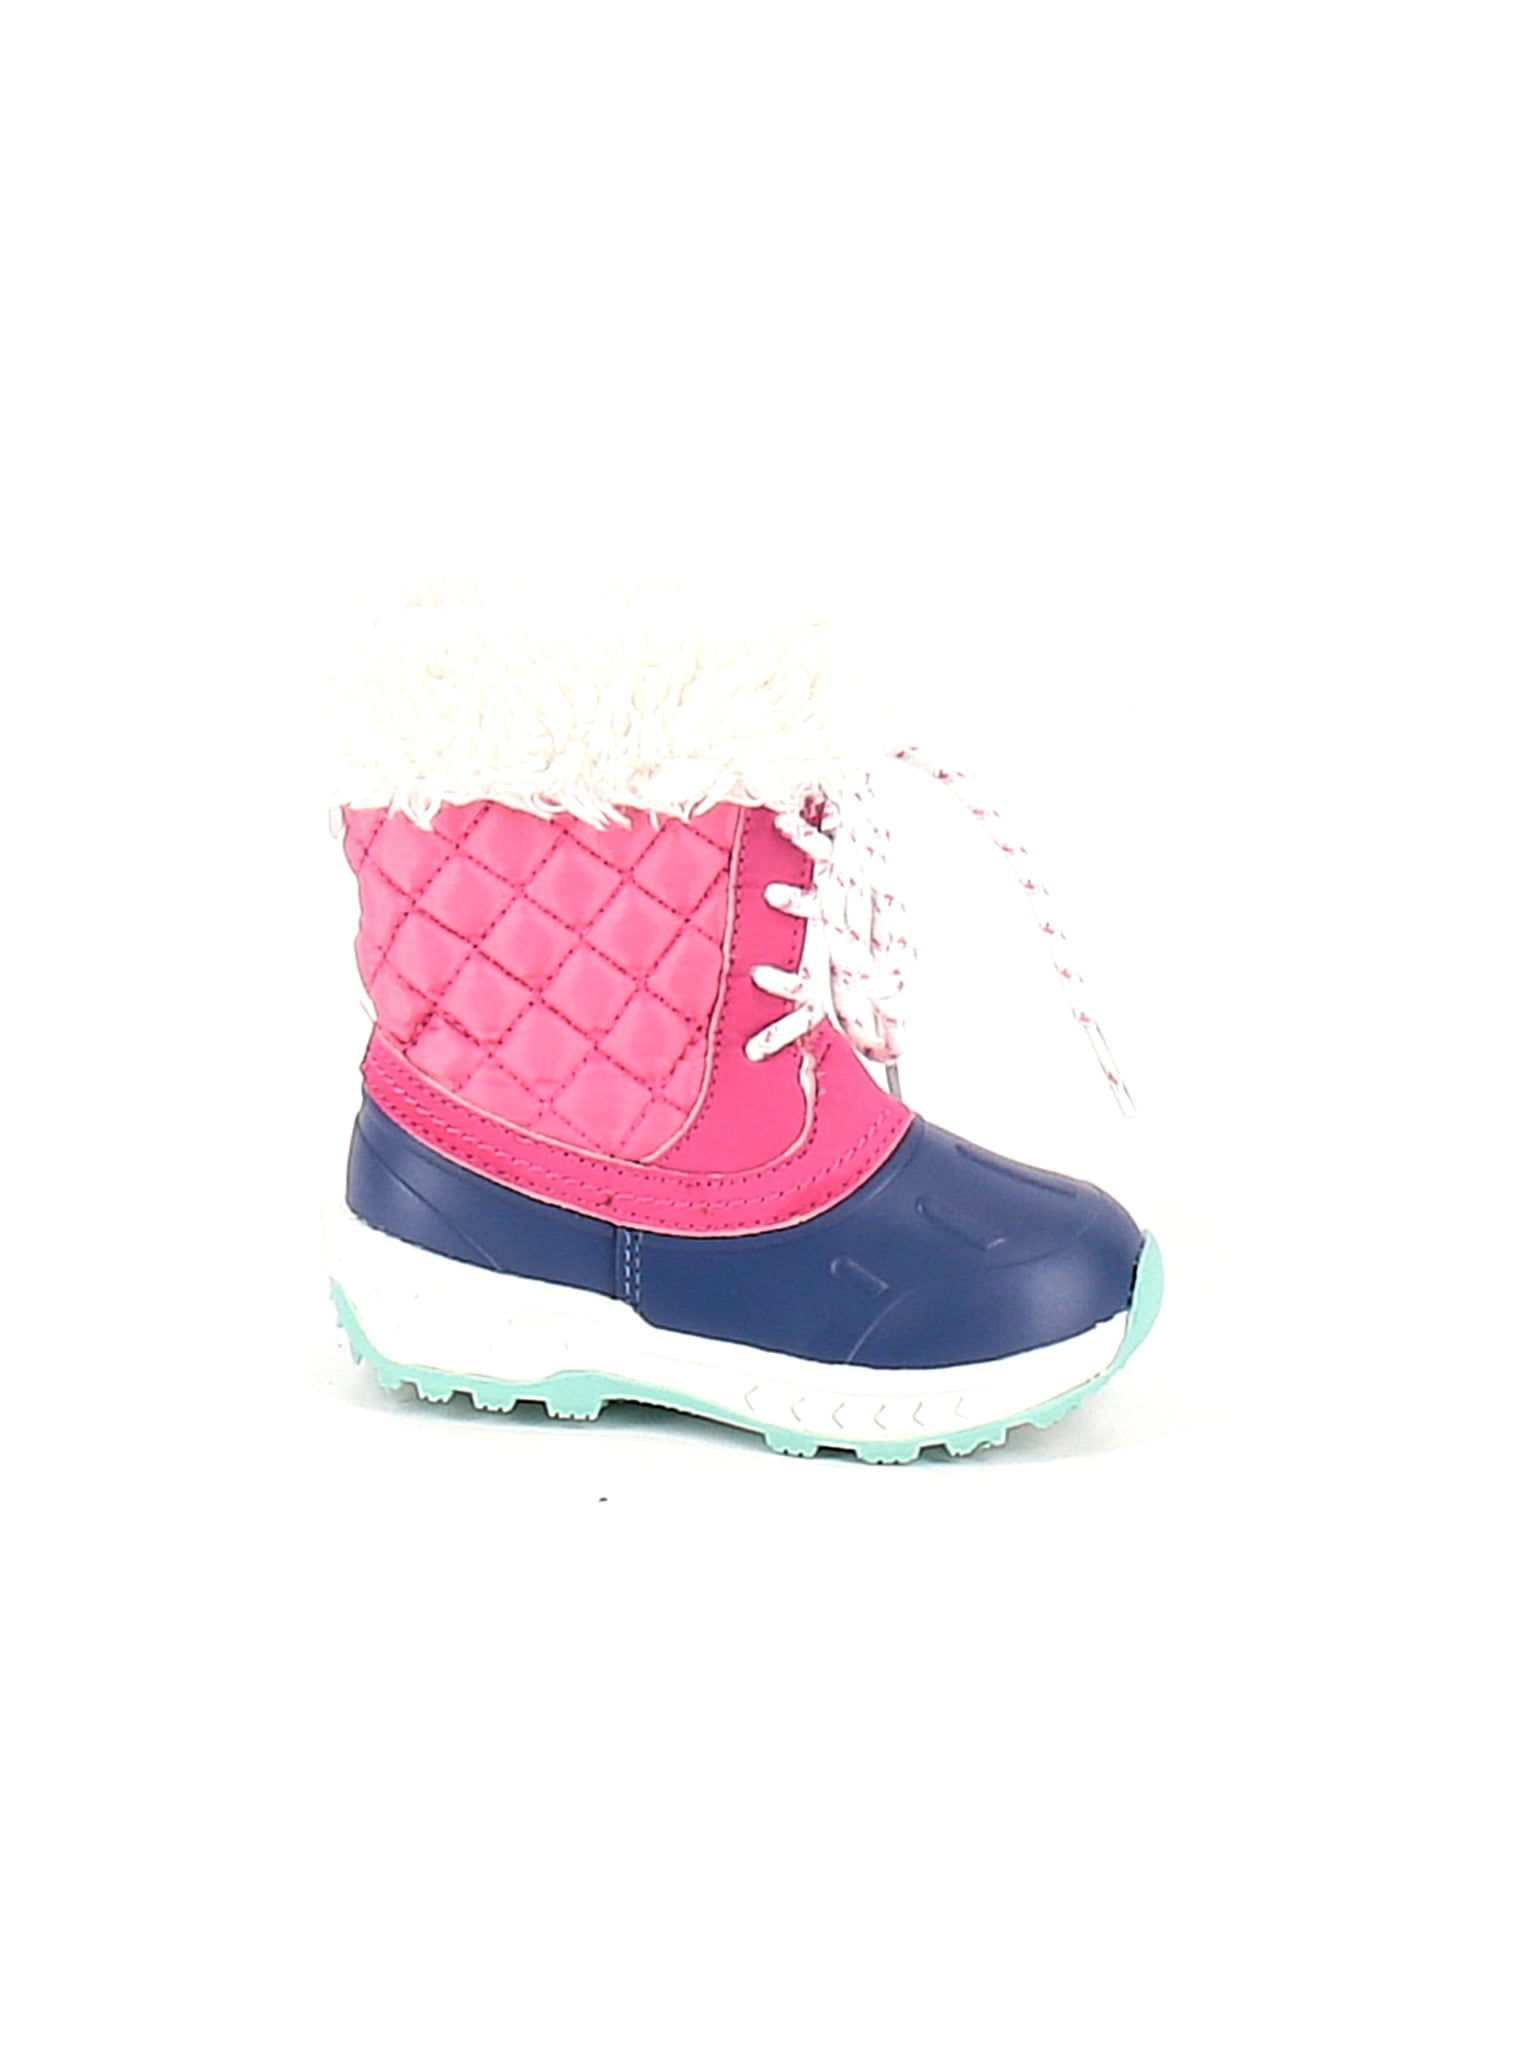 NEW Carter's Toddler Girls LUNAR G Outdoor Navy/Pink WINTER SNOW Boots Shoes 